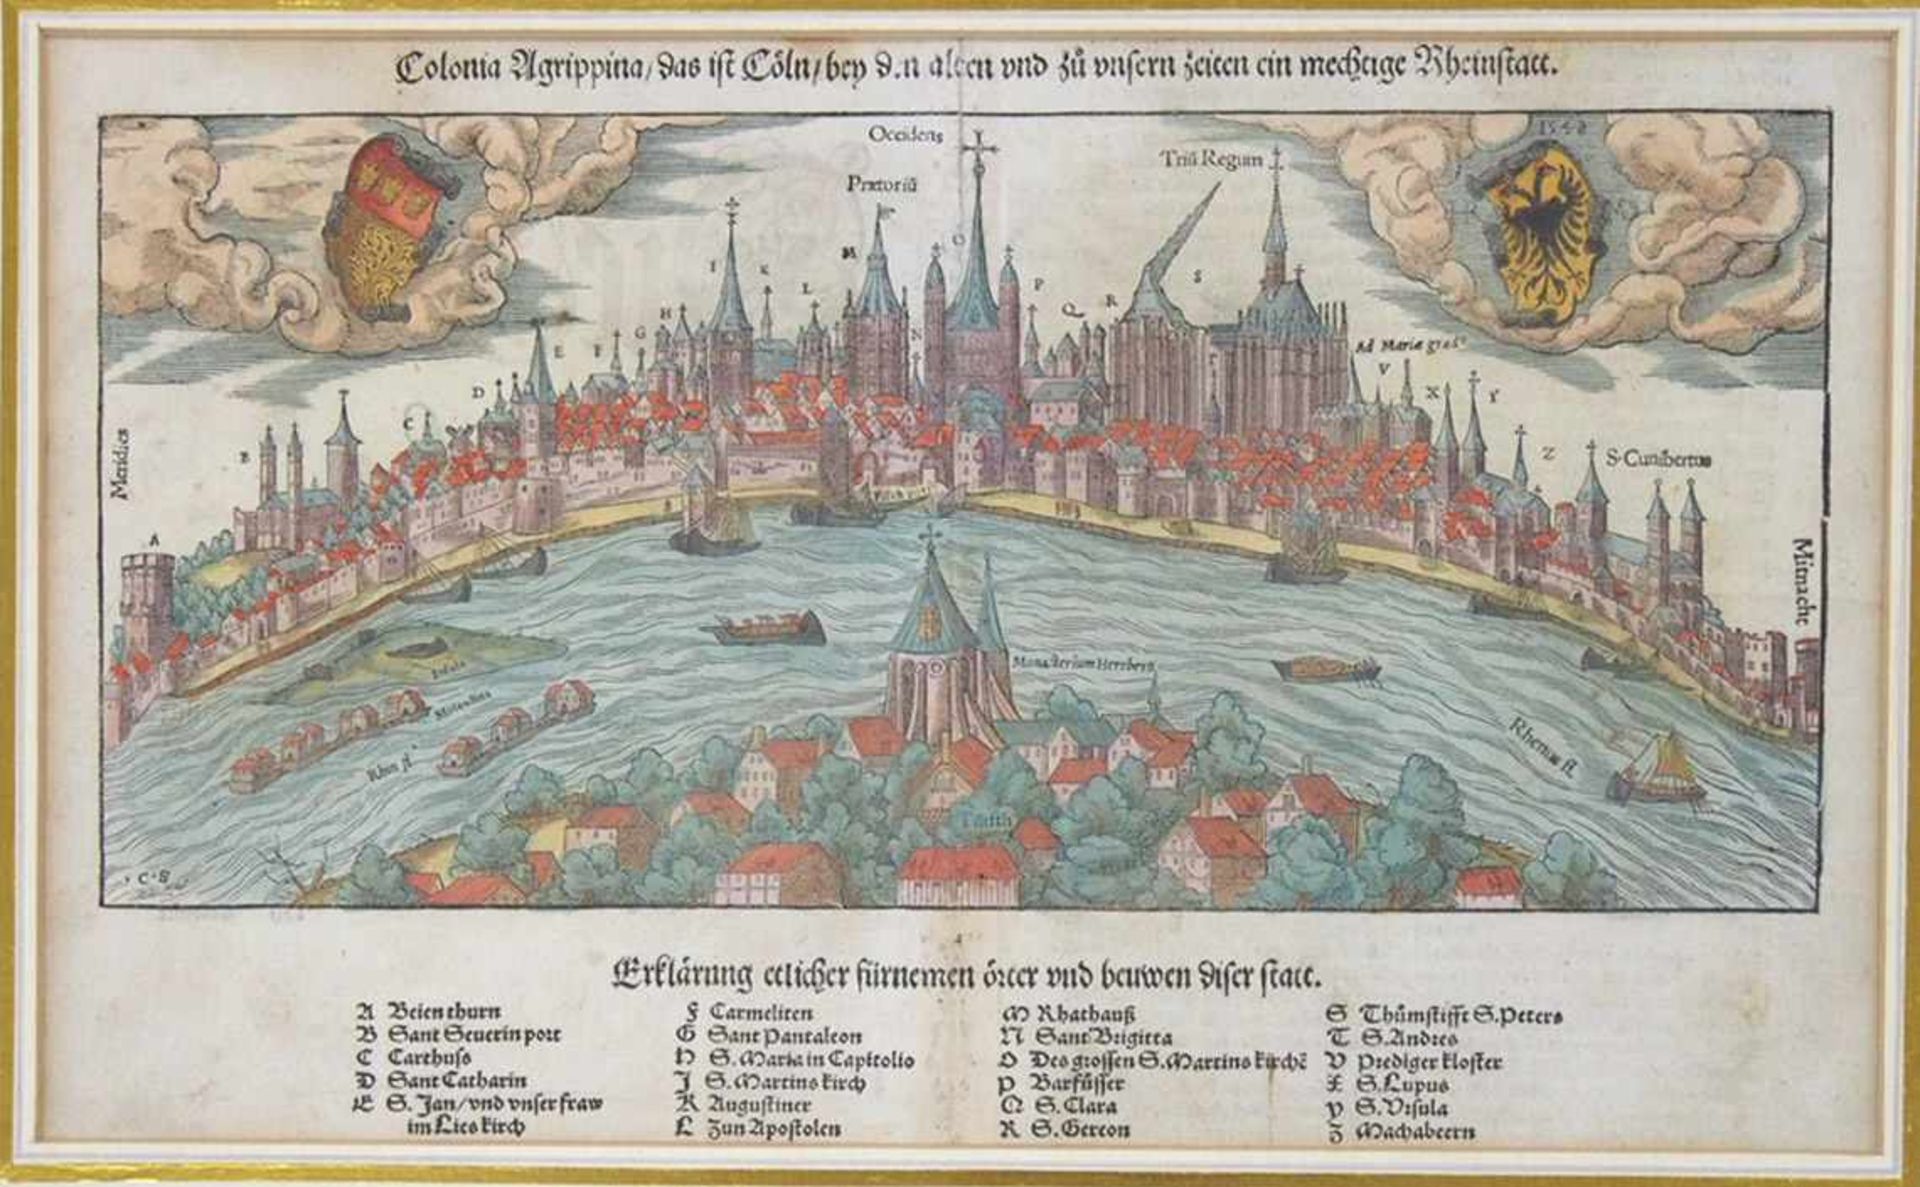 Colonia Agrippina / das ist Cöln…Holzschnitt, altkoloriert aus: Sebastian Münster, Cosmographia,